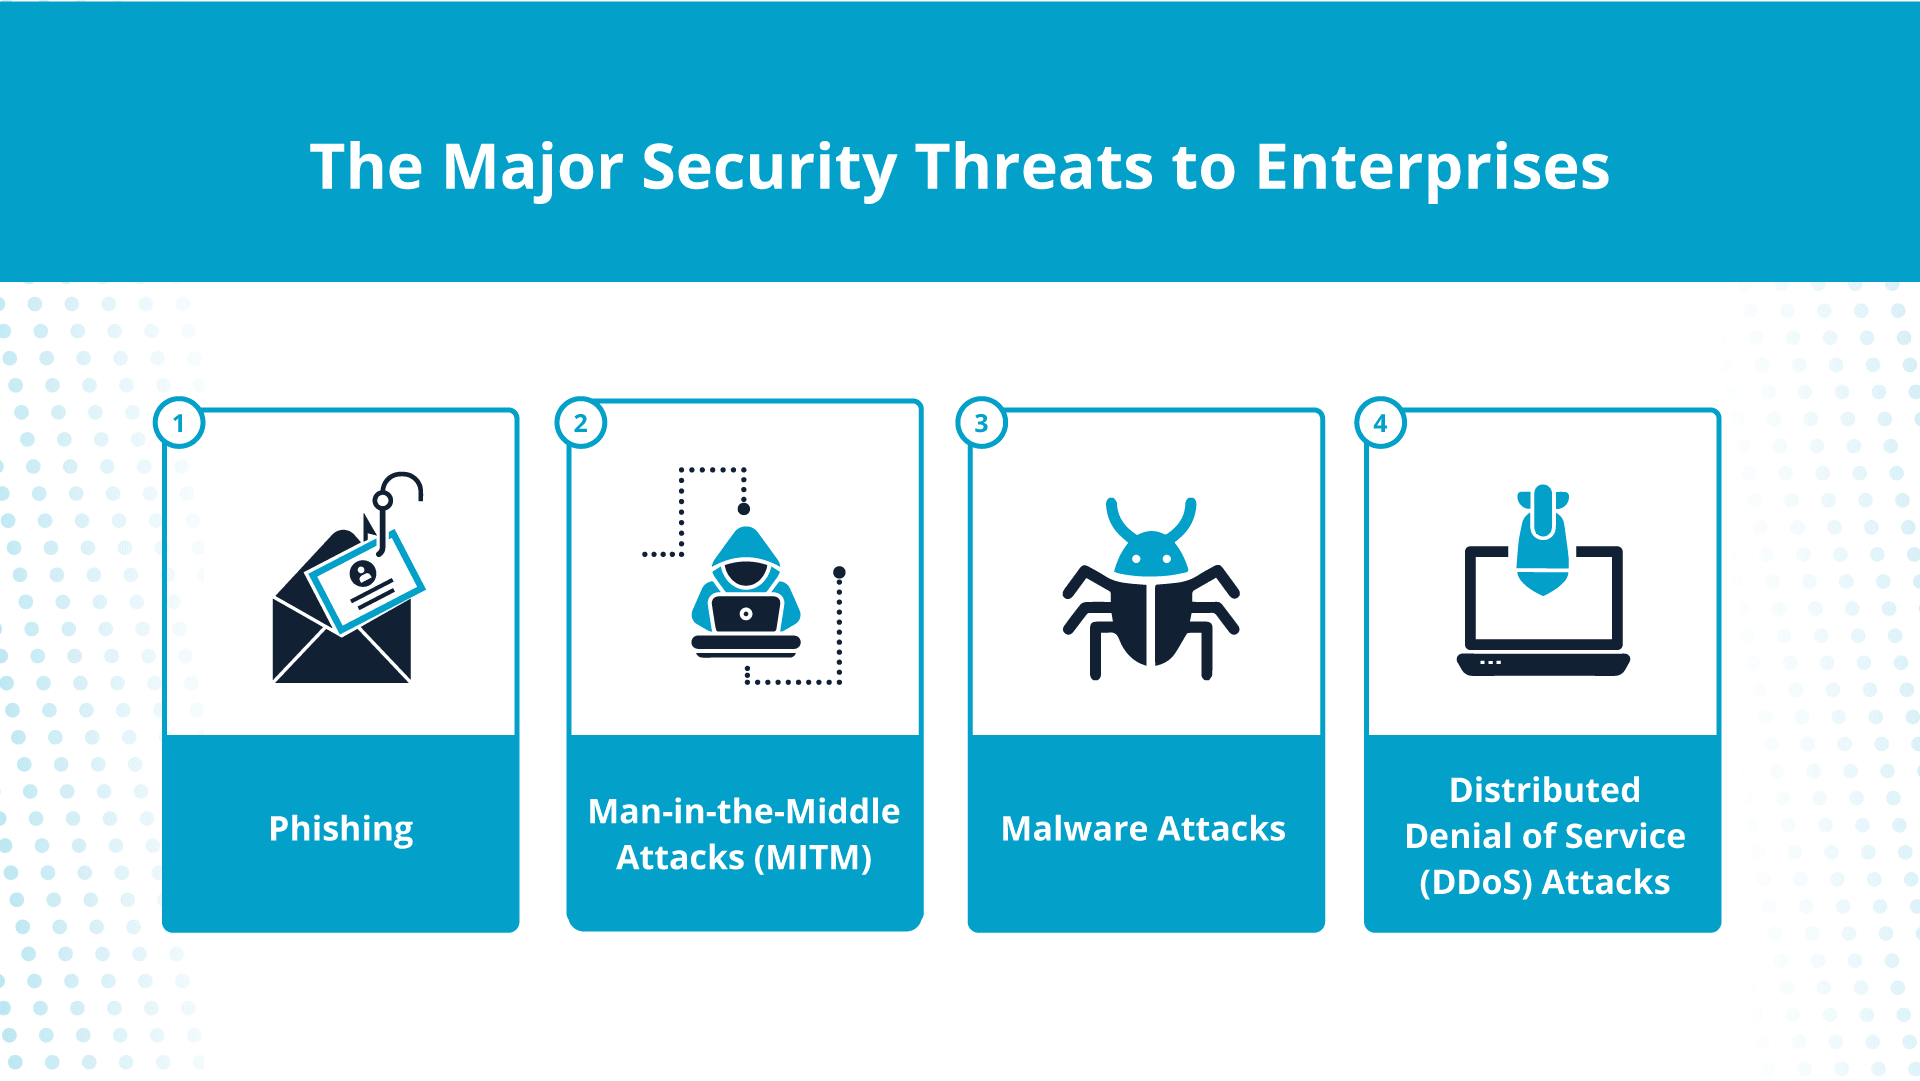 The major security threats to enterprises.